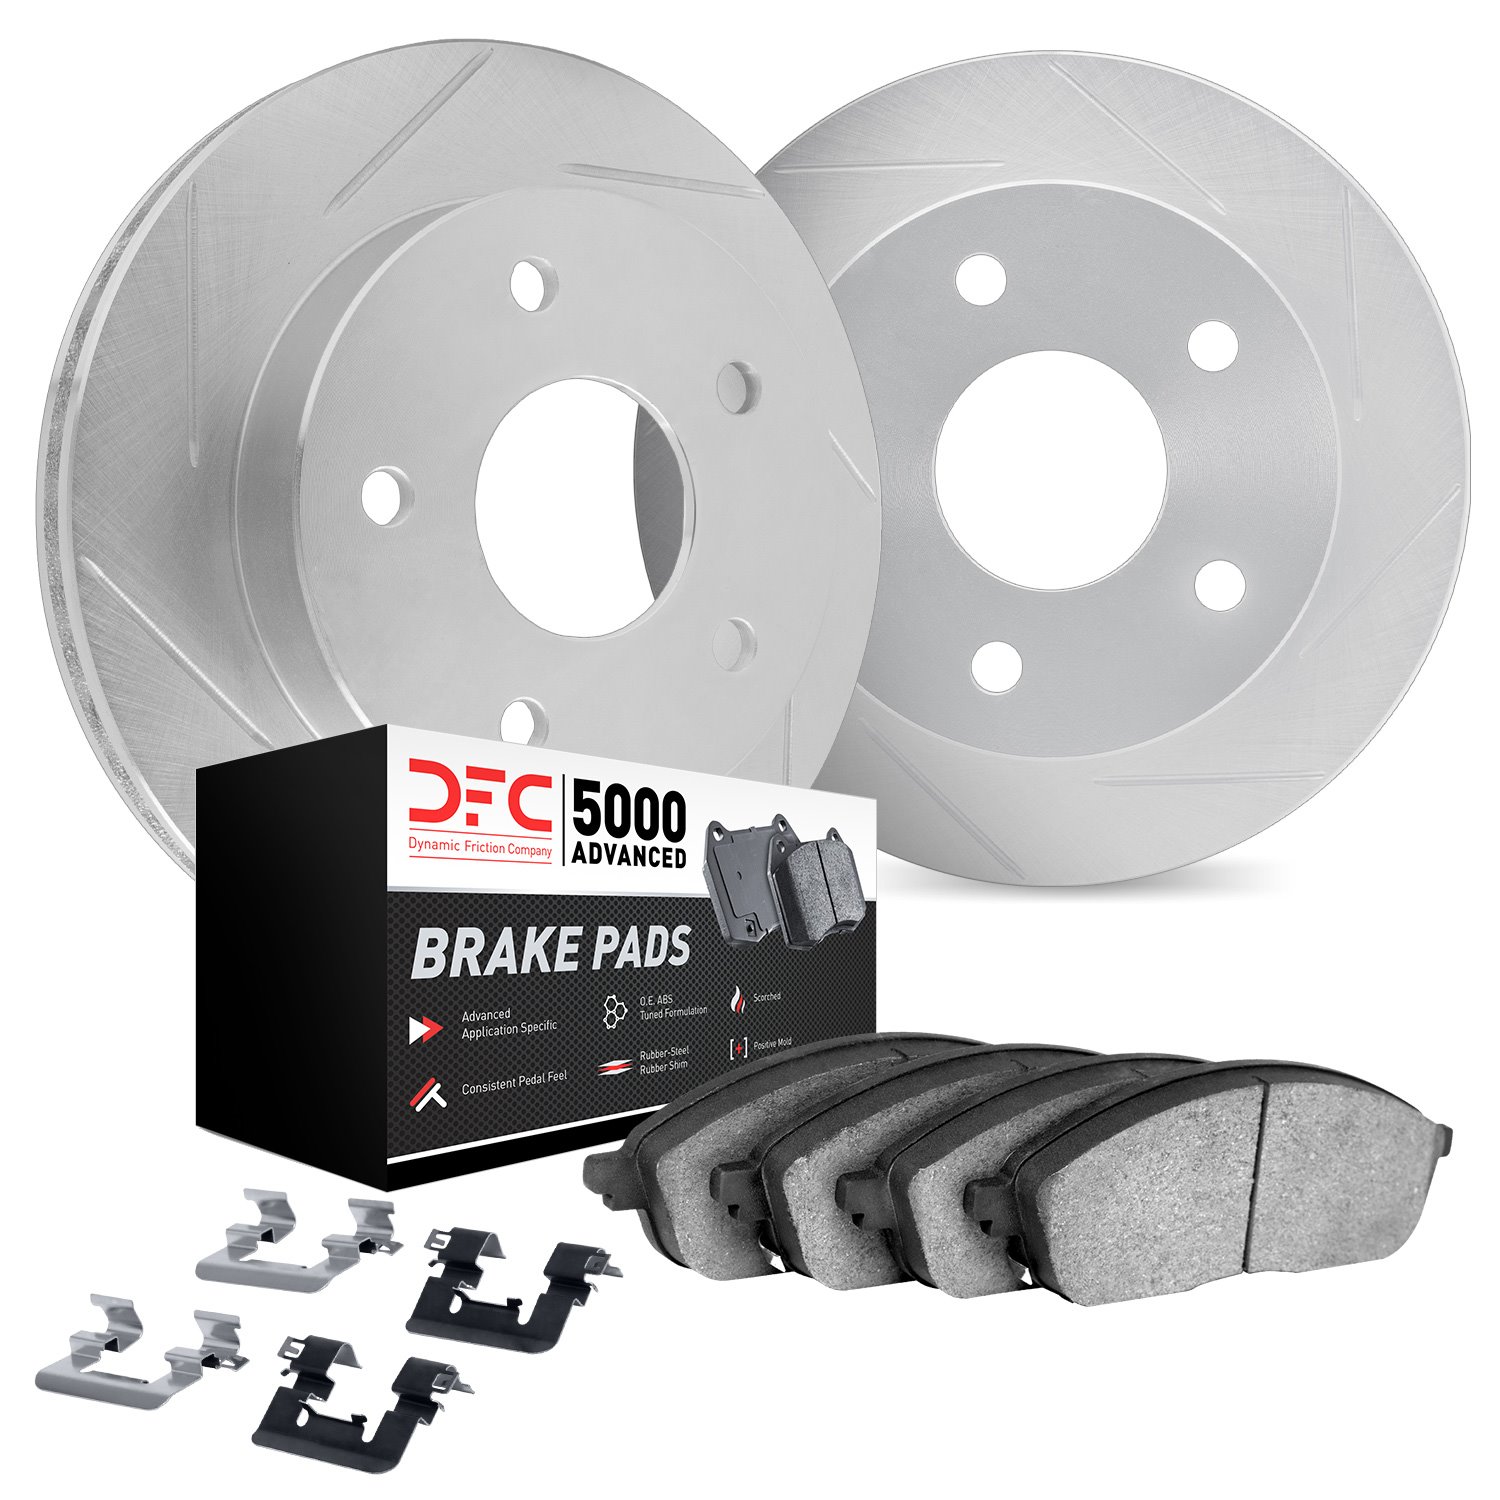 5512-54215 Slotted Brake Rotors w/5000 Advanced Brake Pads Kit & Hardware [Silver], 2013-2019 Ford/Lincoln/Mercury/Mazda, Positi